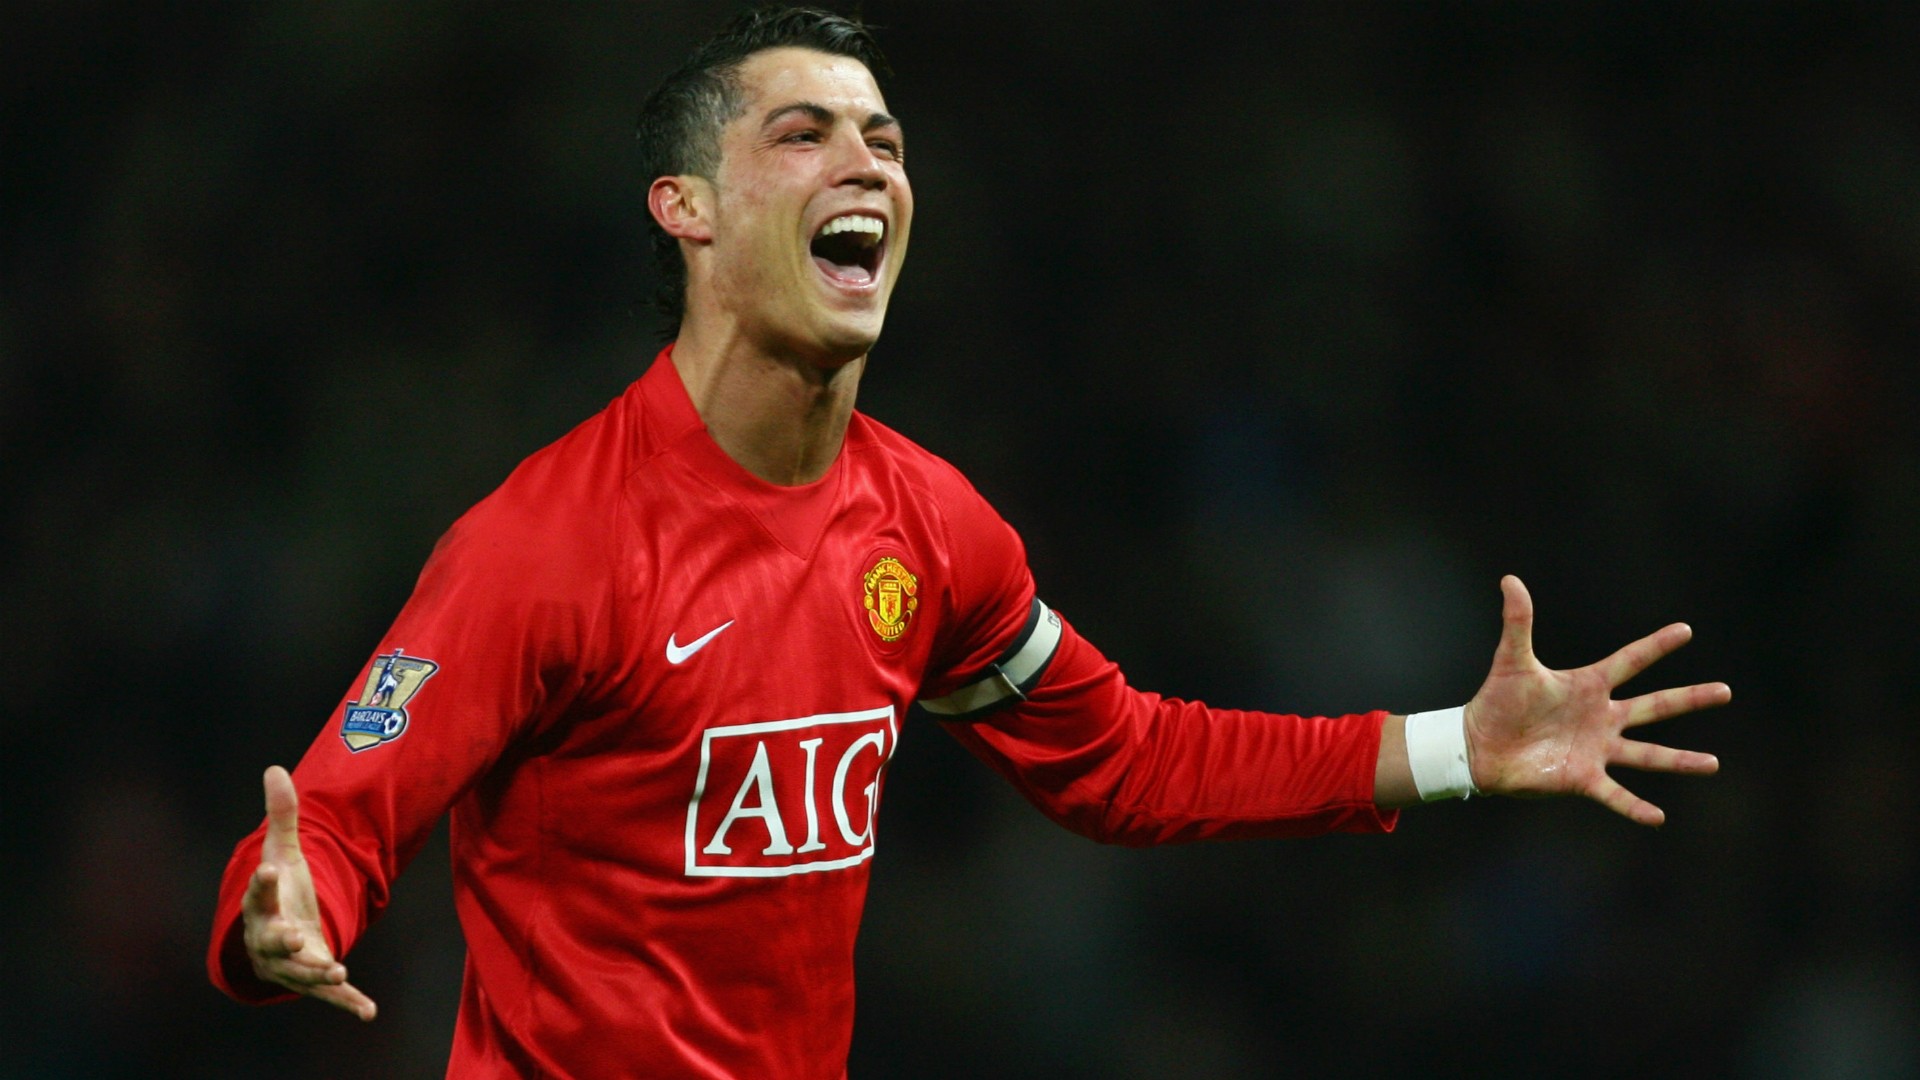 Cristiano Ronaldo Fitness Tips: Achieving Peak Performance